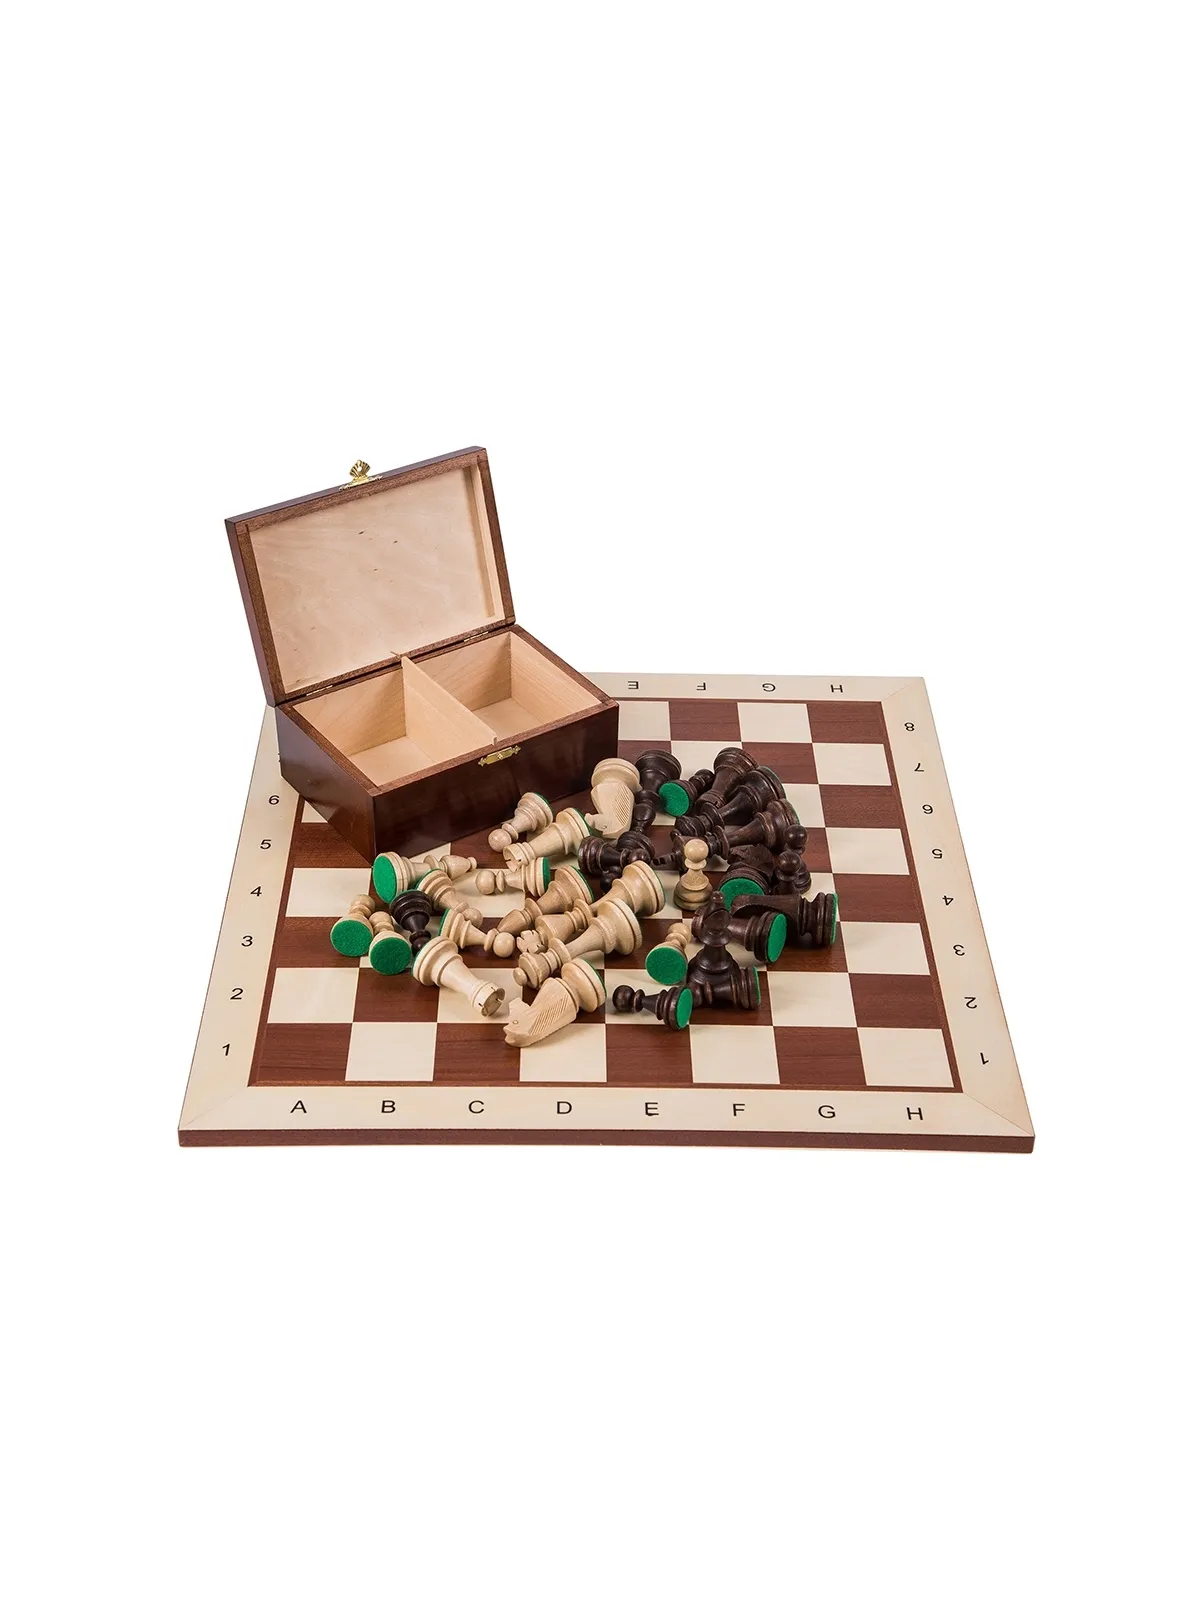 Profi Chess Set No 6 - Mahogany BL